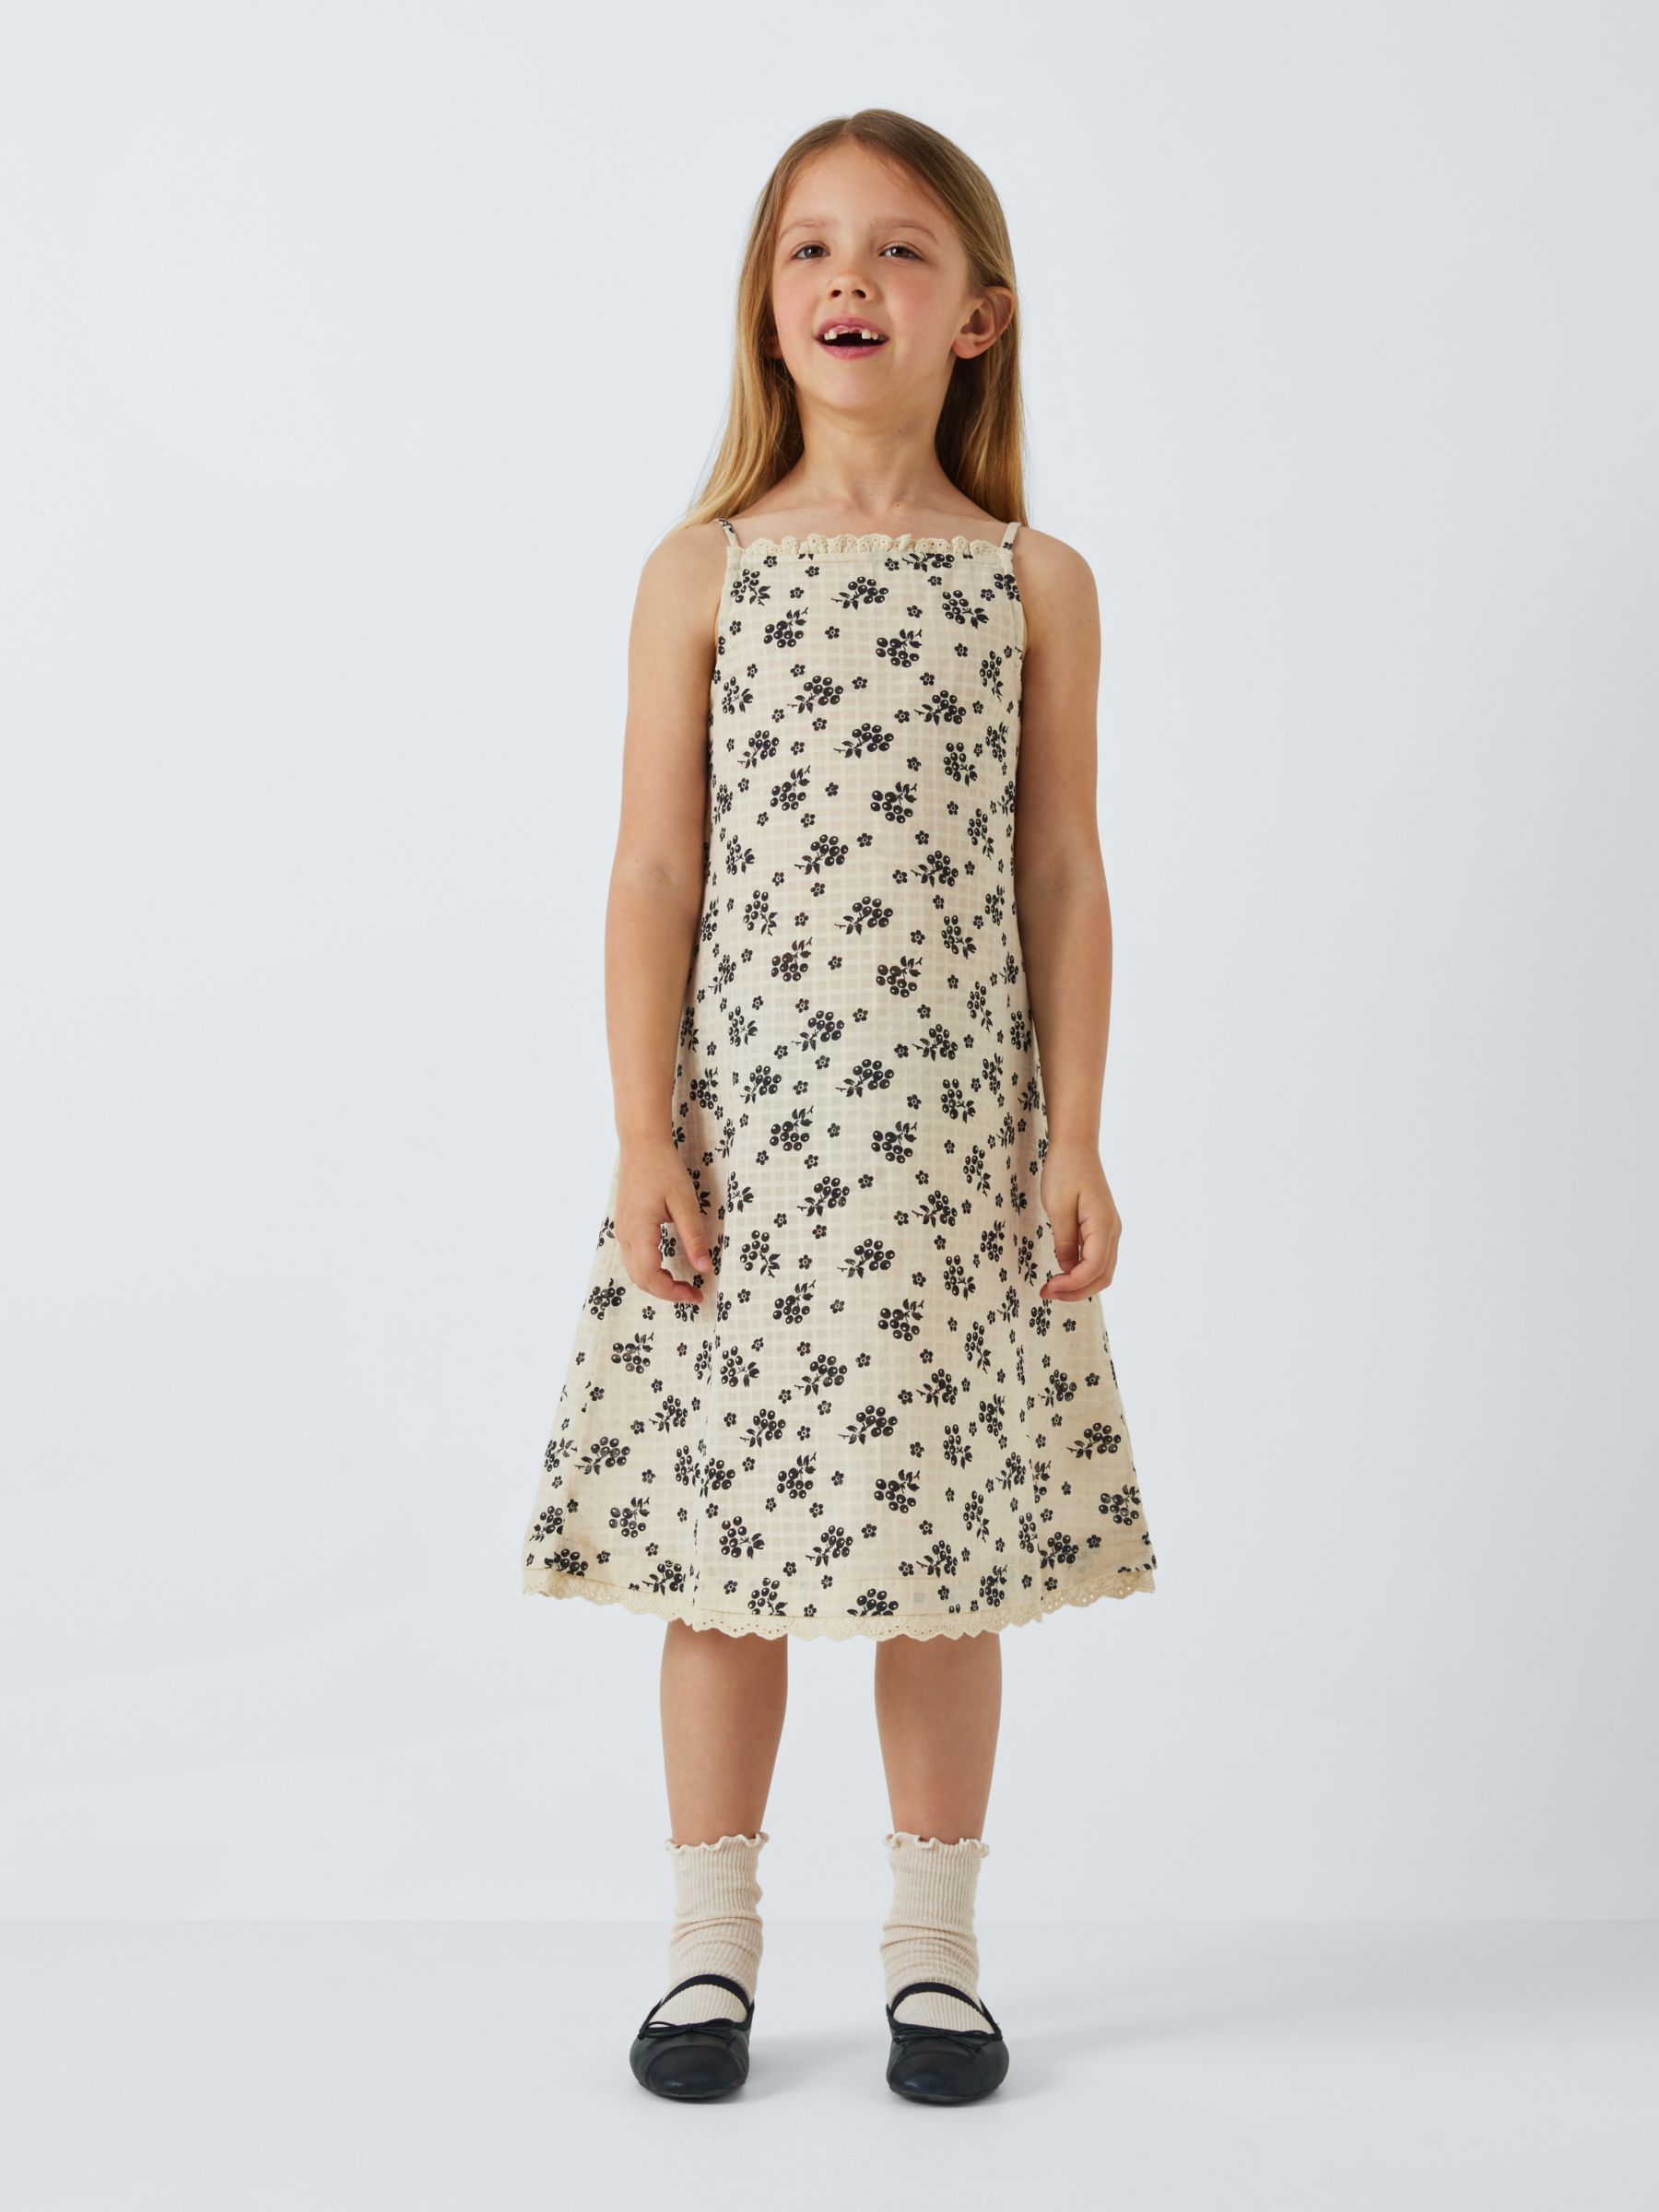 Caramel Kids' Hyssop Berry Bud Print Summer Dress, Off White/Navy, 8 years